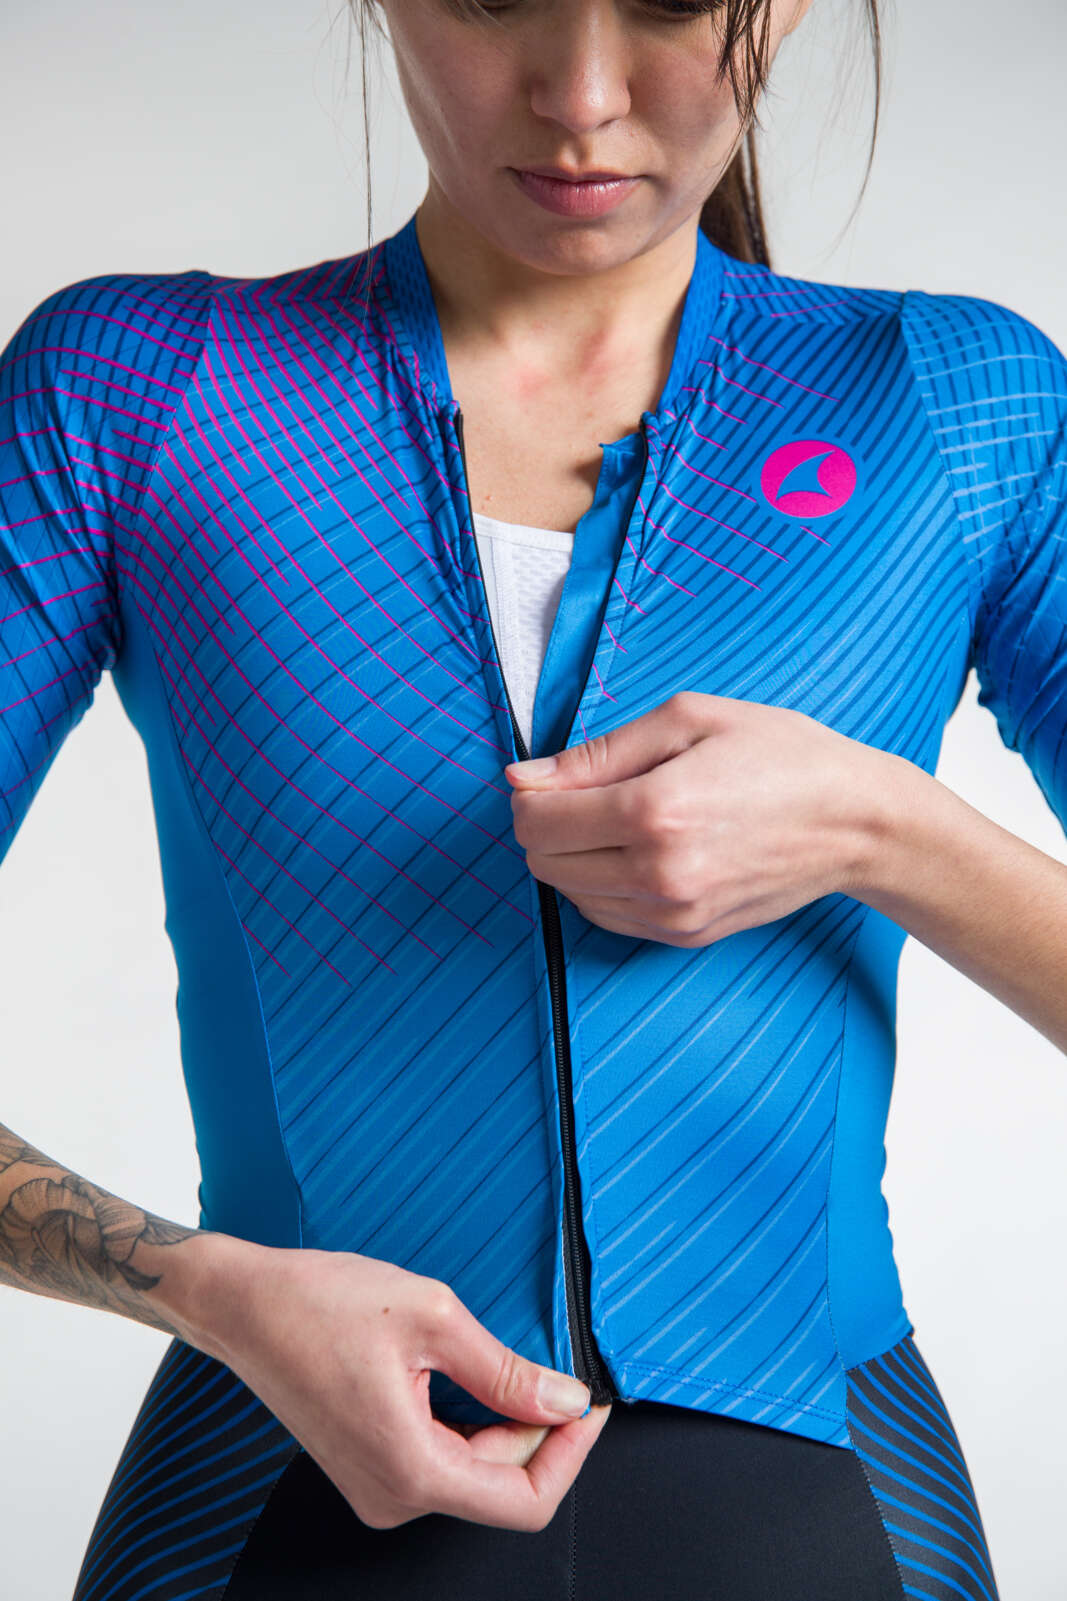 Women's Triathlon Suit - Zipper Detail